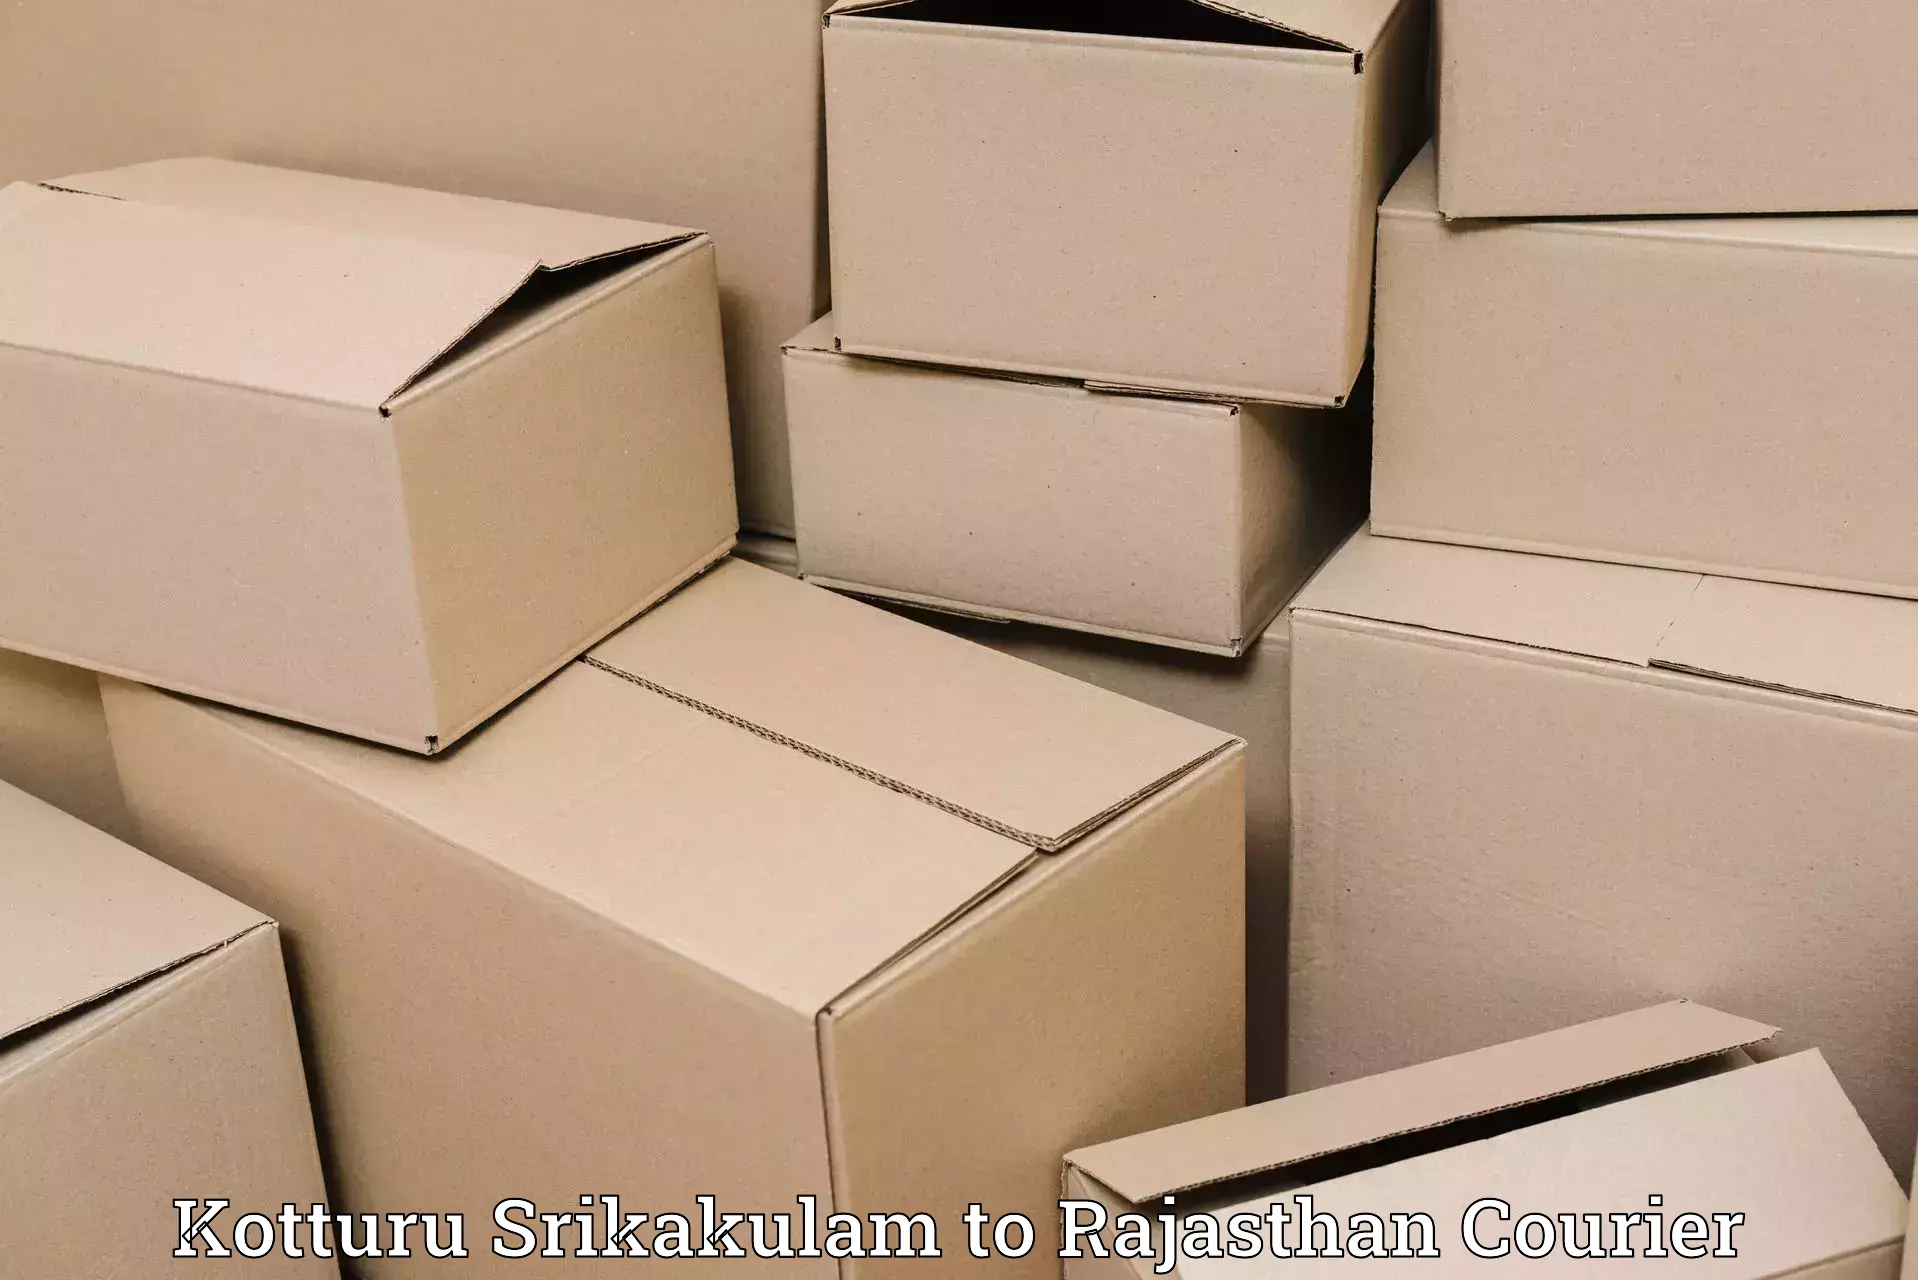 Nationwide delivery network Kotturu Srikakulam to Shrimadhopur